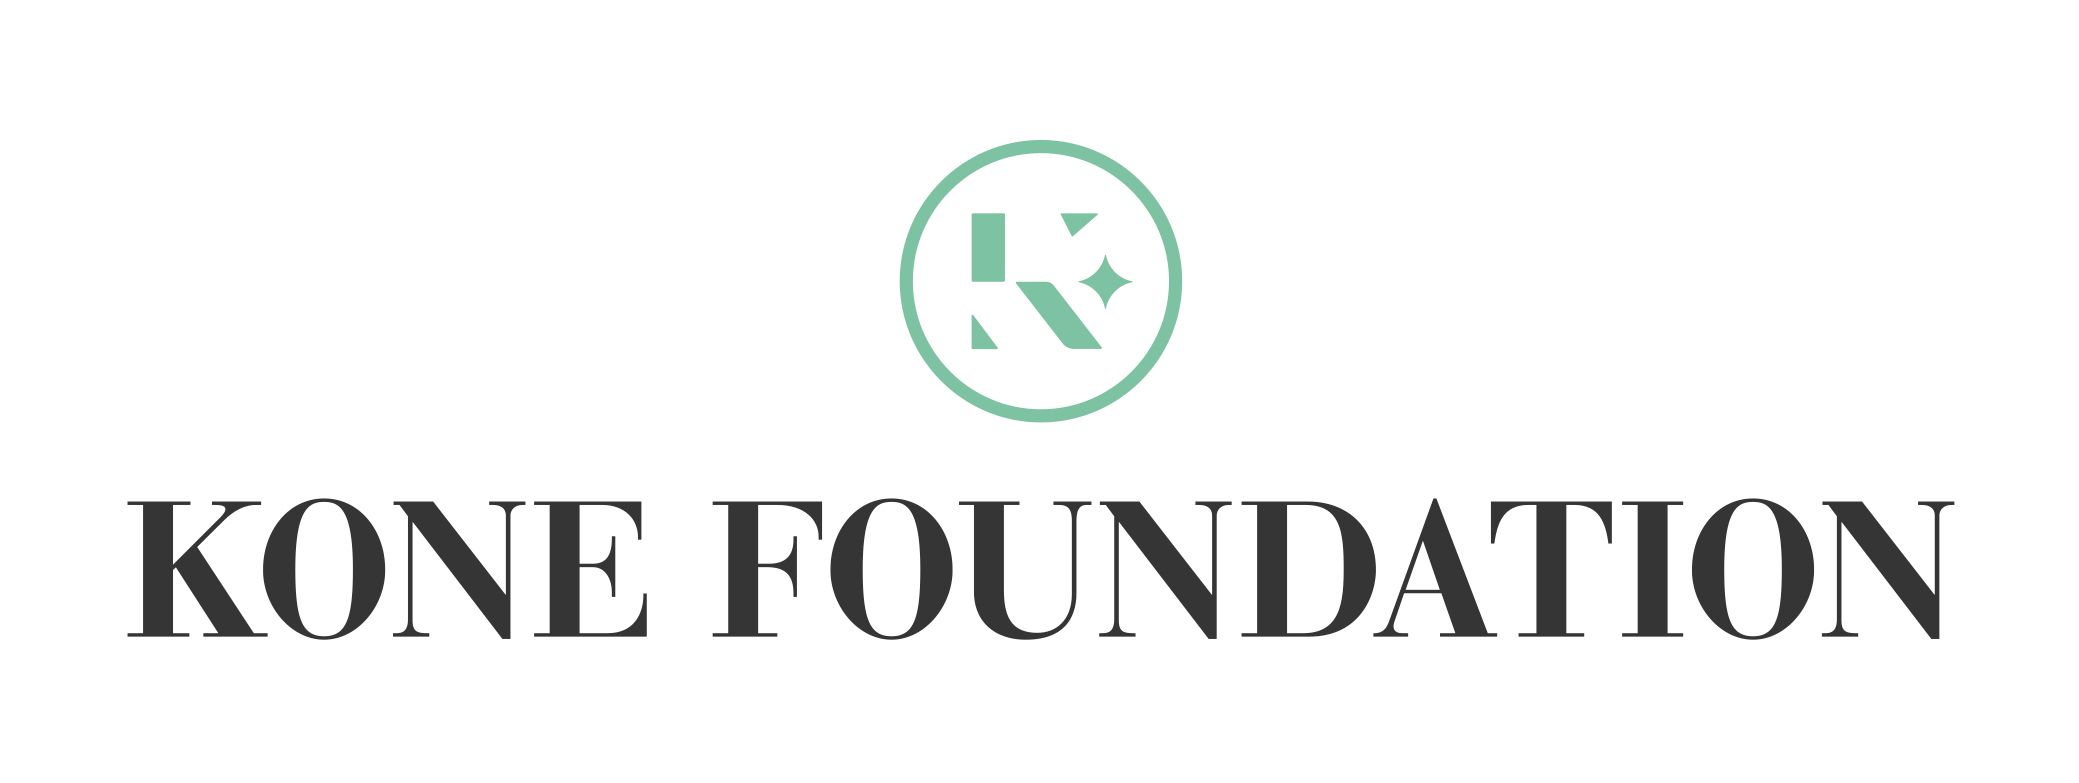 Kone Foundation.